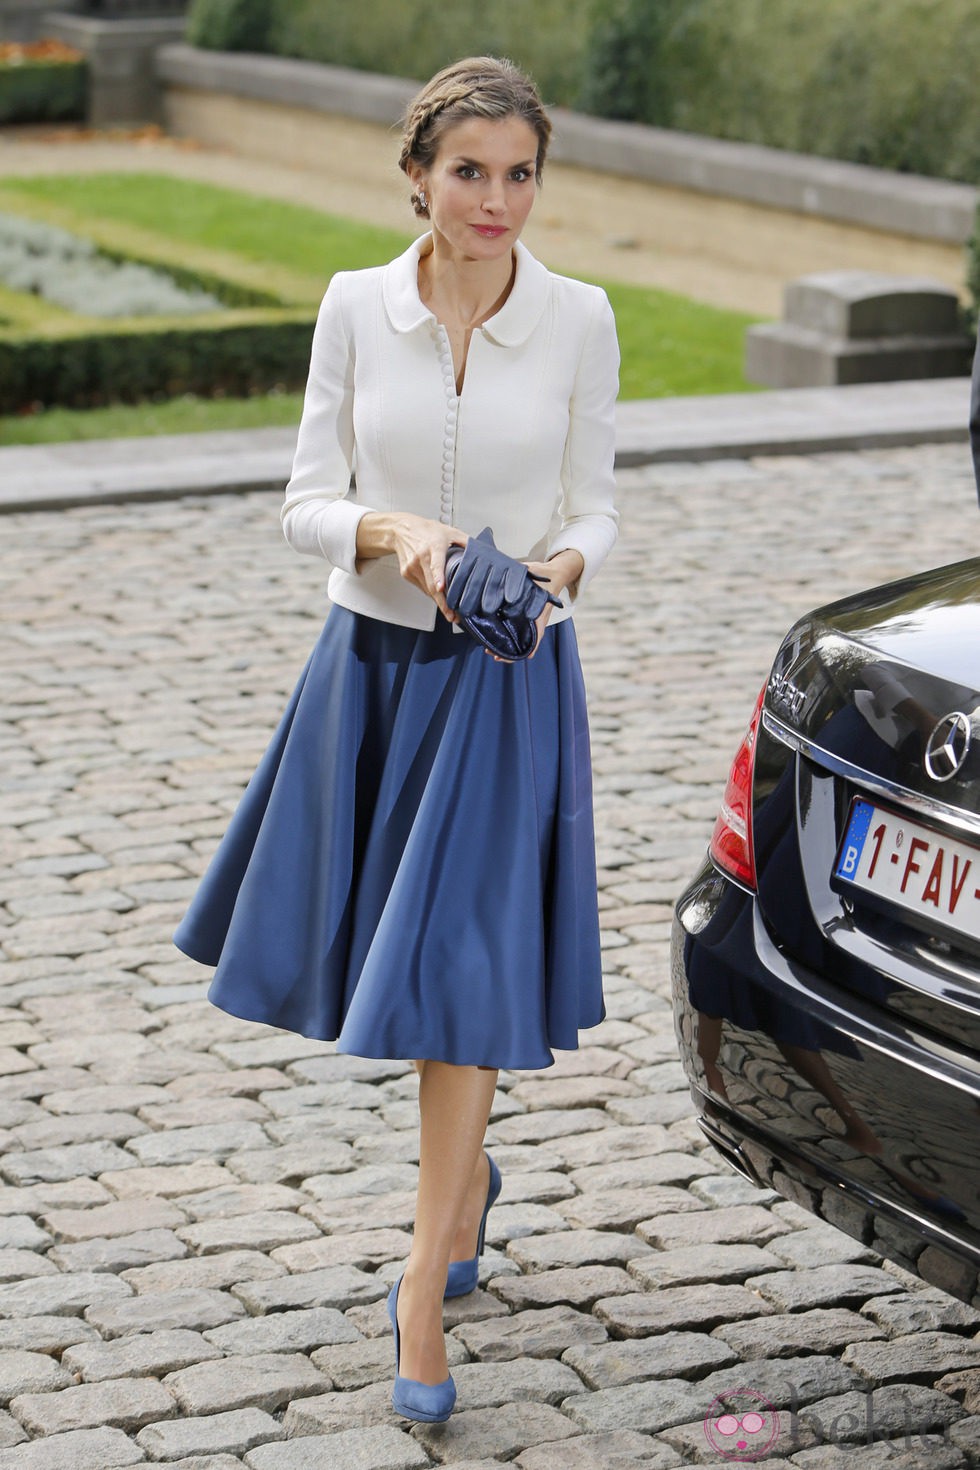 La Reina Letizia en su primer viaje oficial a Bélgica como Reina de España